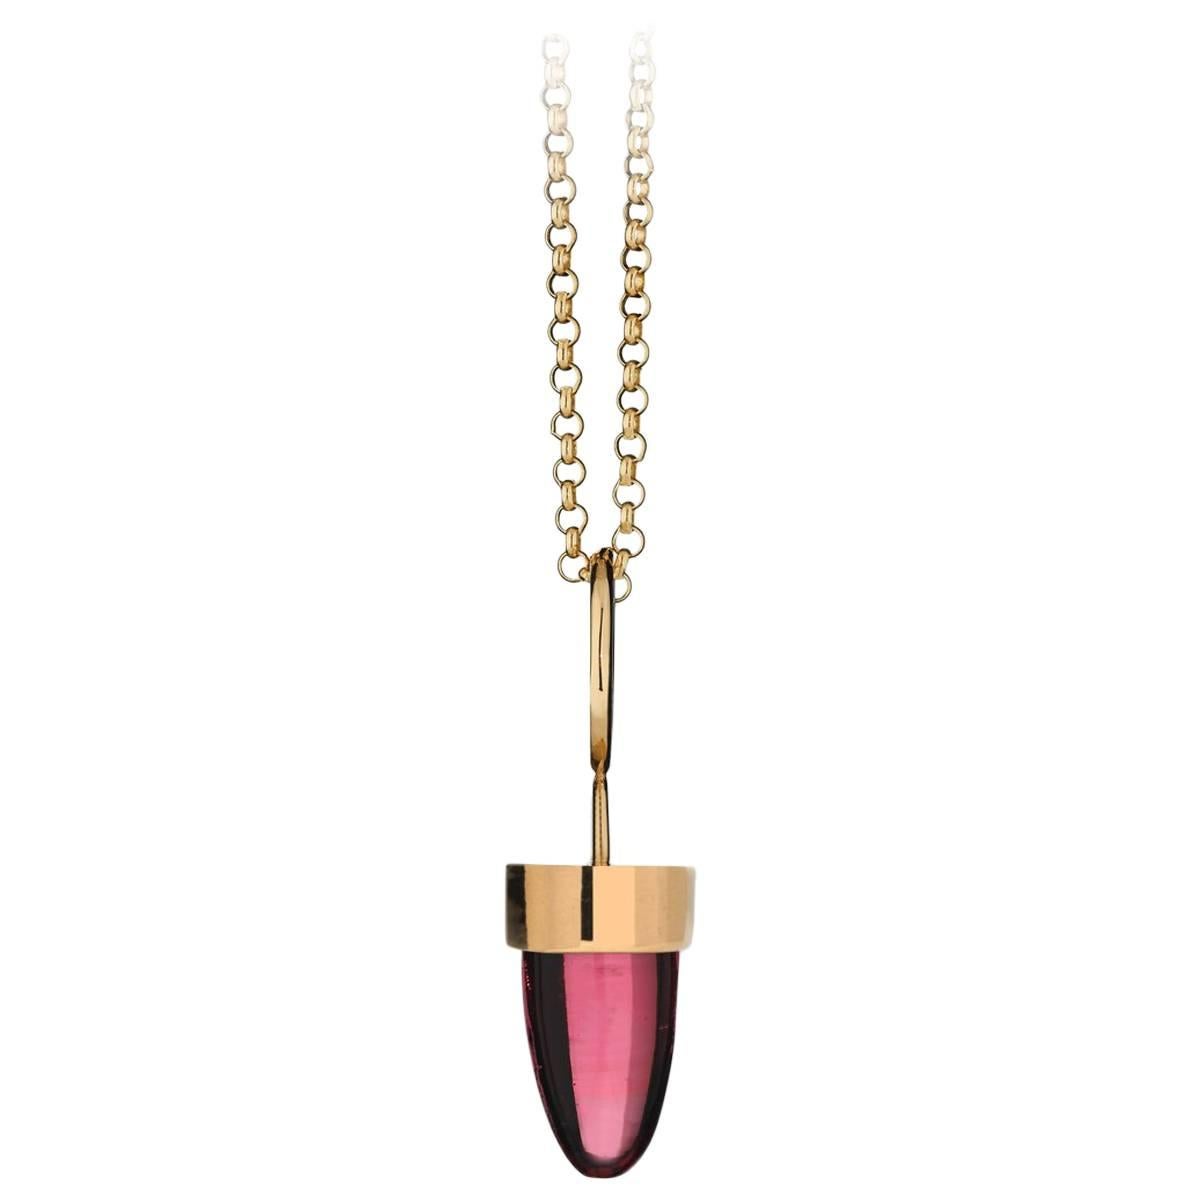 MAVIADA's Modern Minimalist Teal Quartz Stone 18 Karat Gold Pendant Necklace For Sale 4